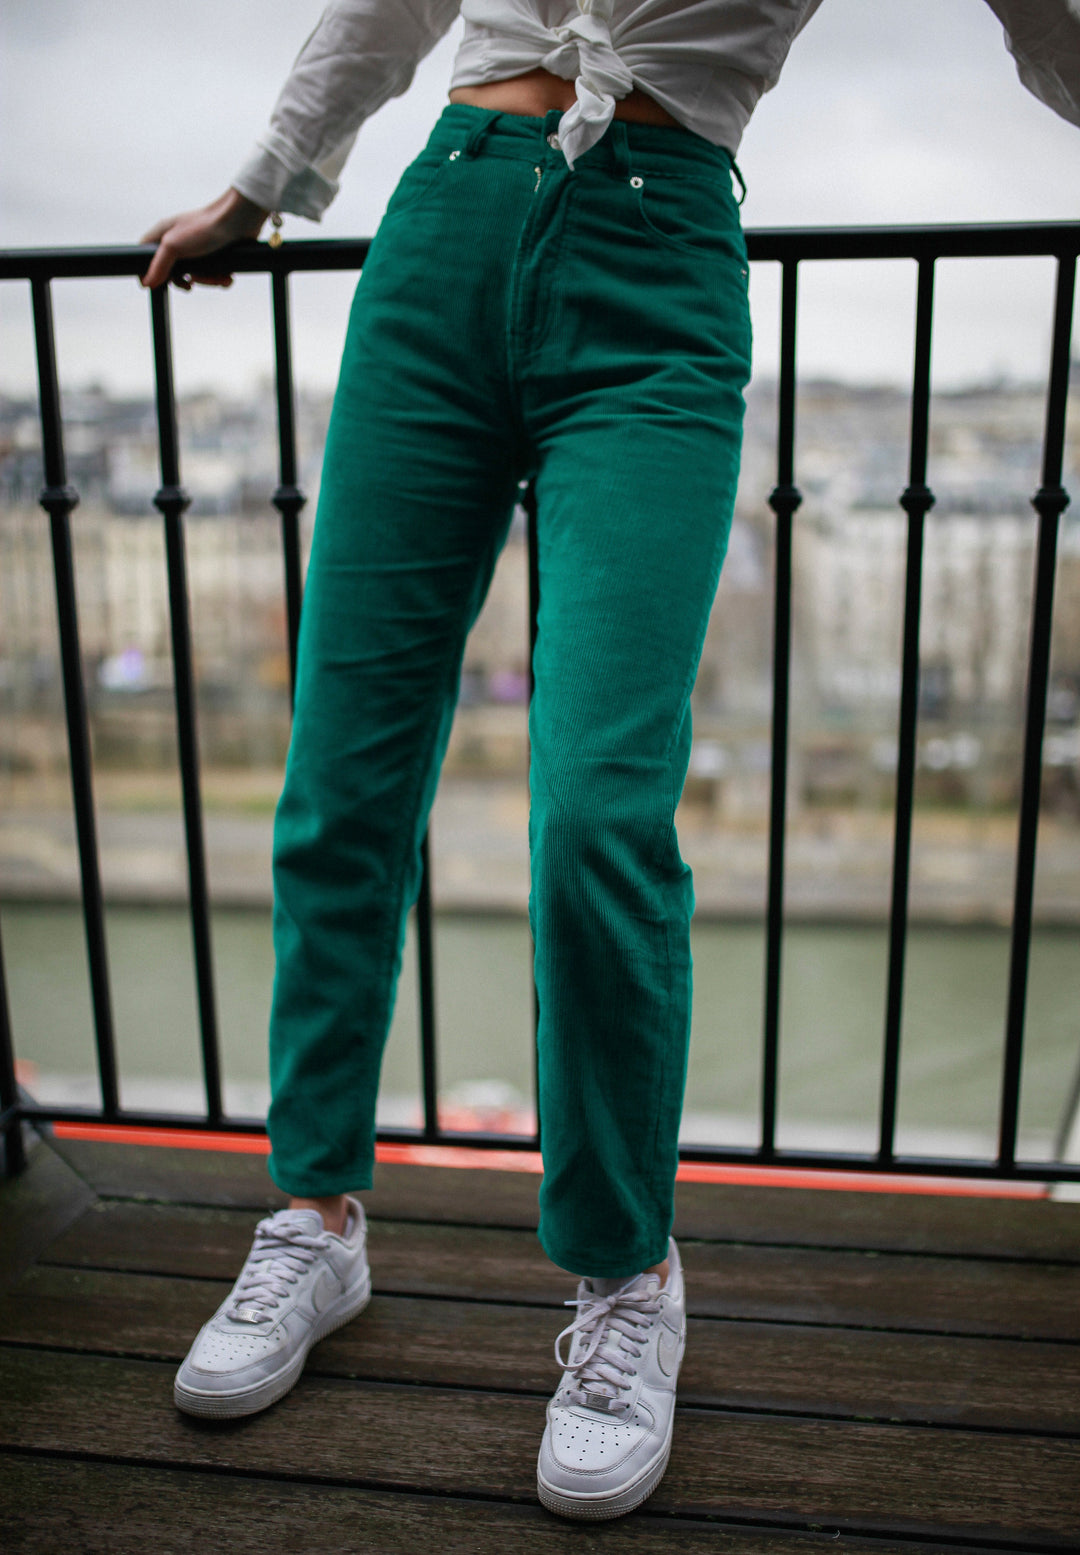 Green Mom Pants - 36